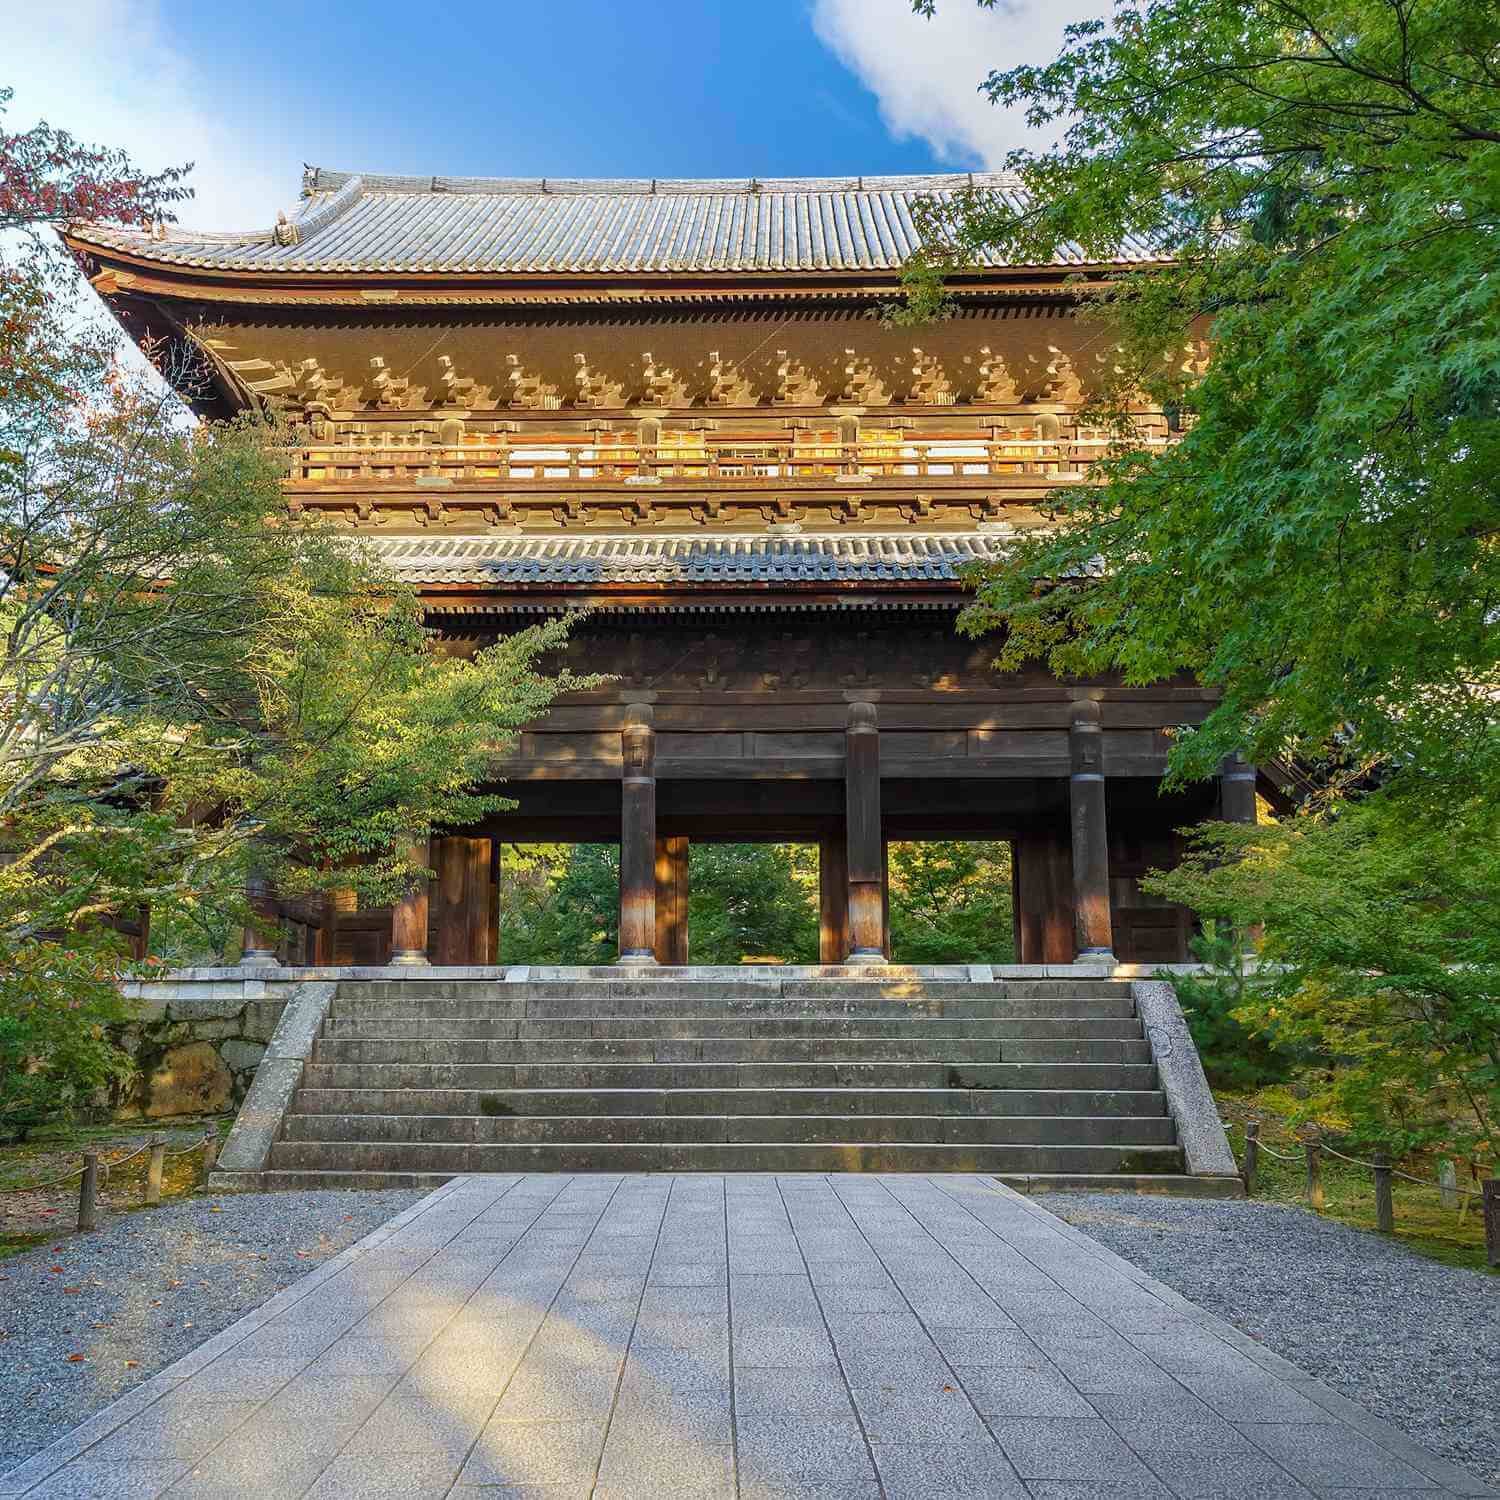 Photos: Nanzenji Temple in Kyoto